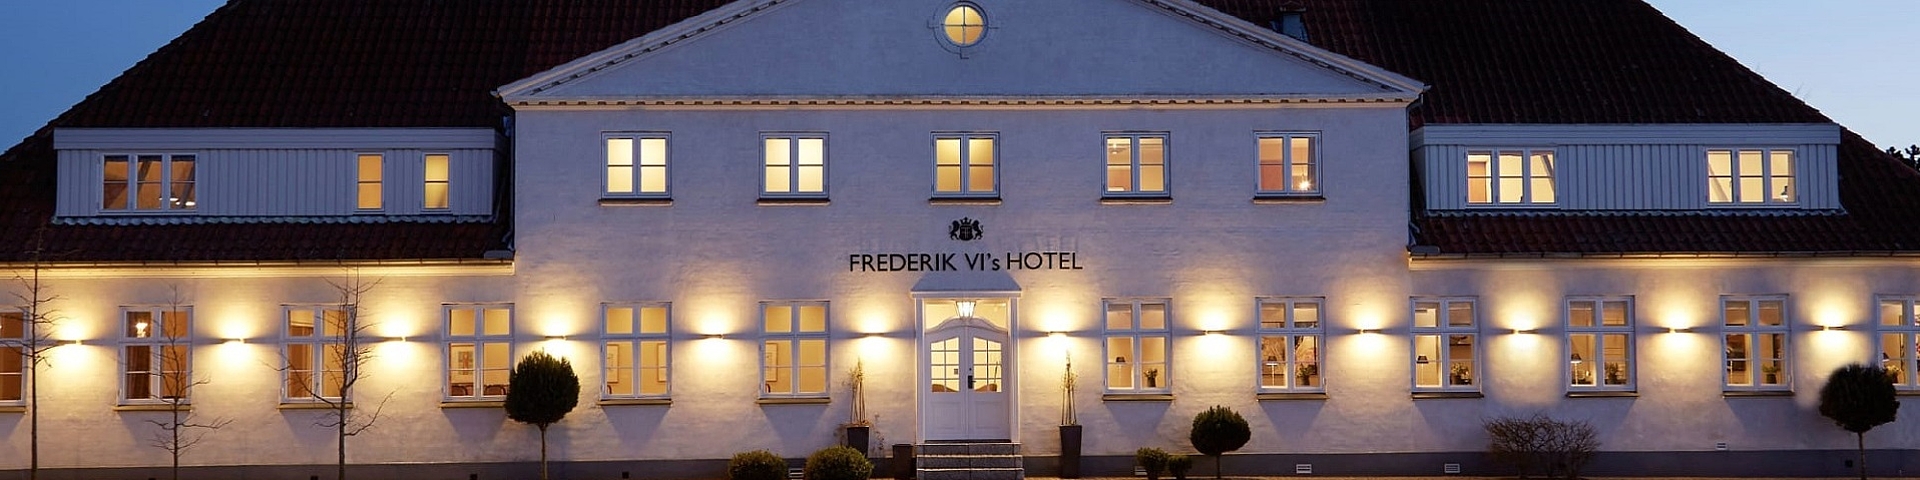 Frederik VI's Hotel | Golf på Fyn